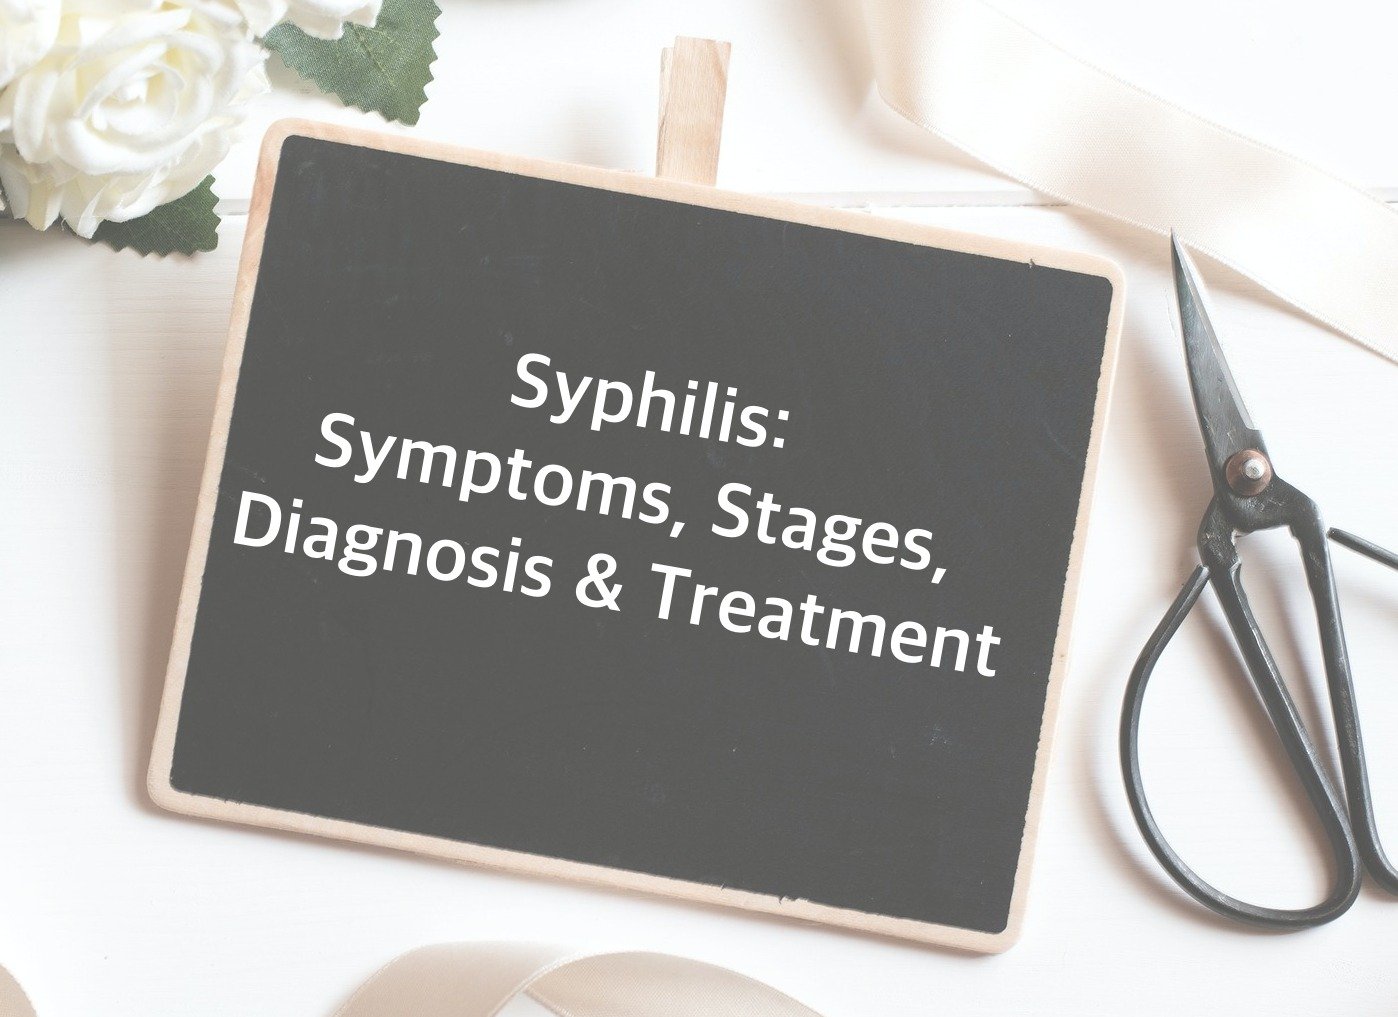 Syphilis treatment